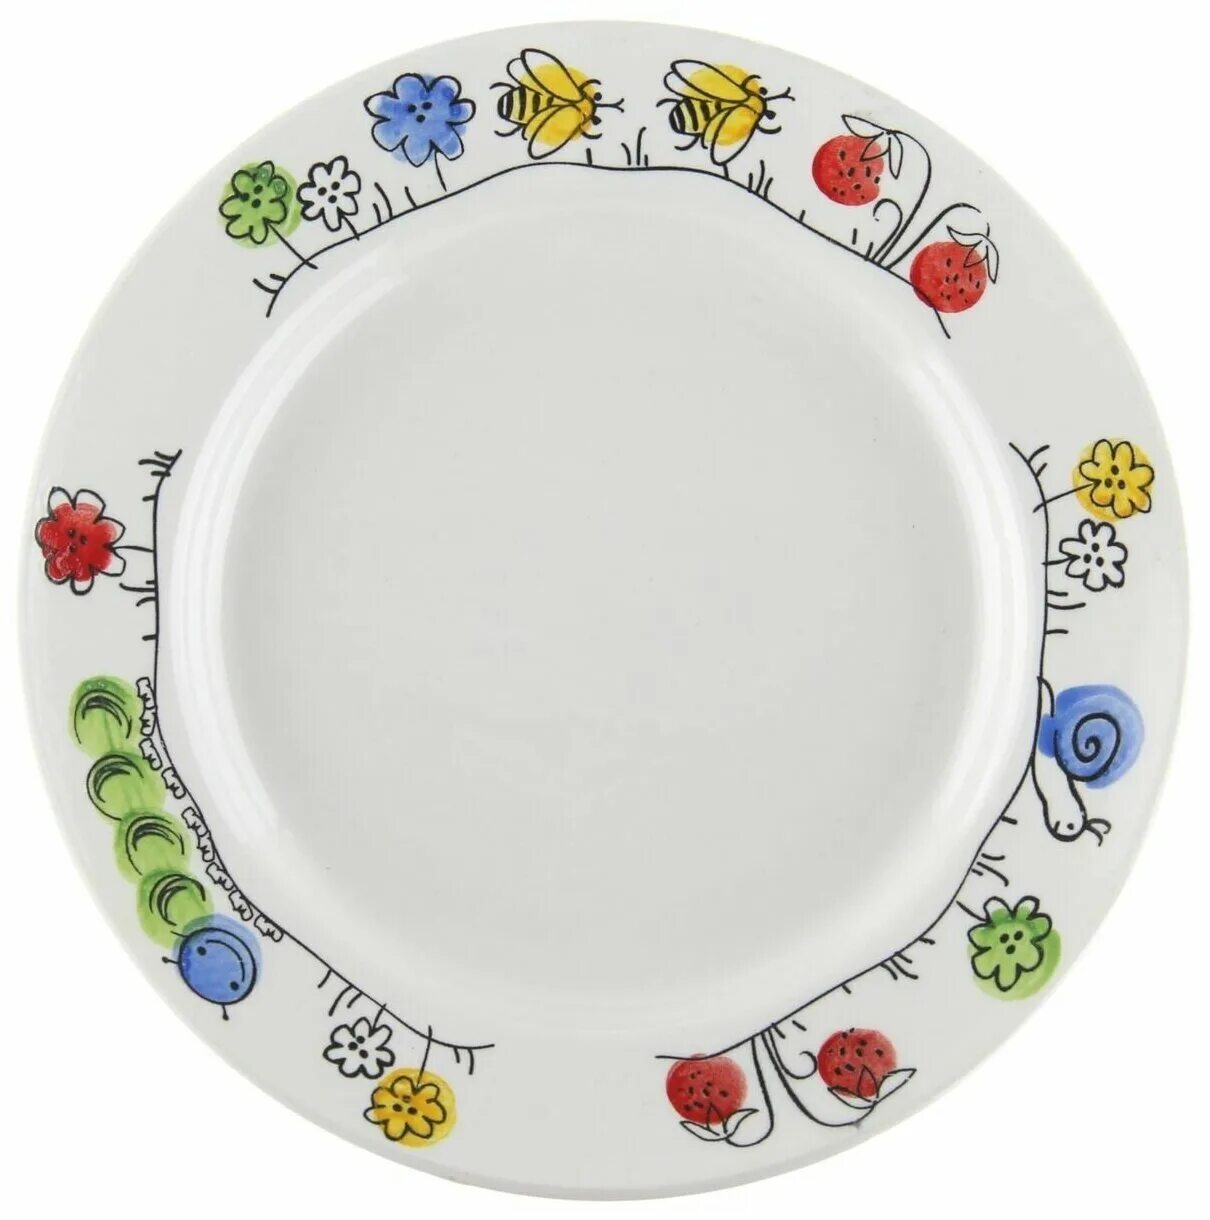 Вау тарелка. Тарелочки для детей. Тарелка для дошкольников. Тарелки для детского сада. Детская тарелка на белом фоне.